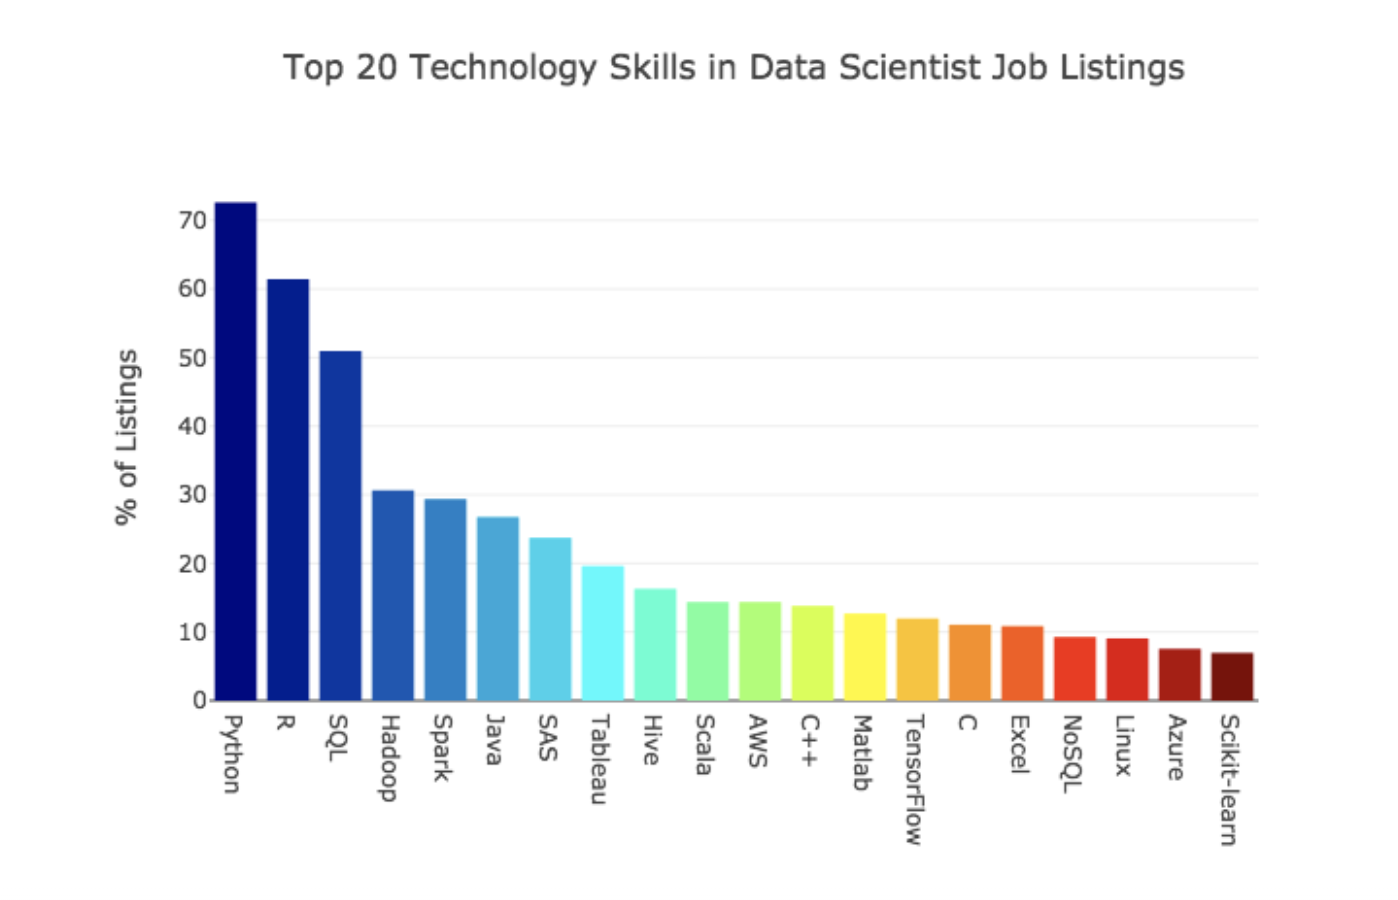 Top 20 technology skills in data scientist job listings